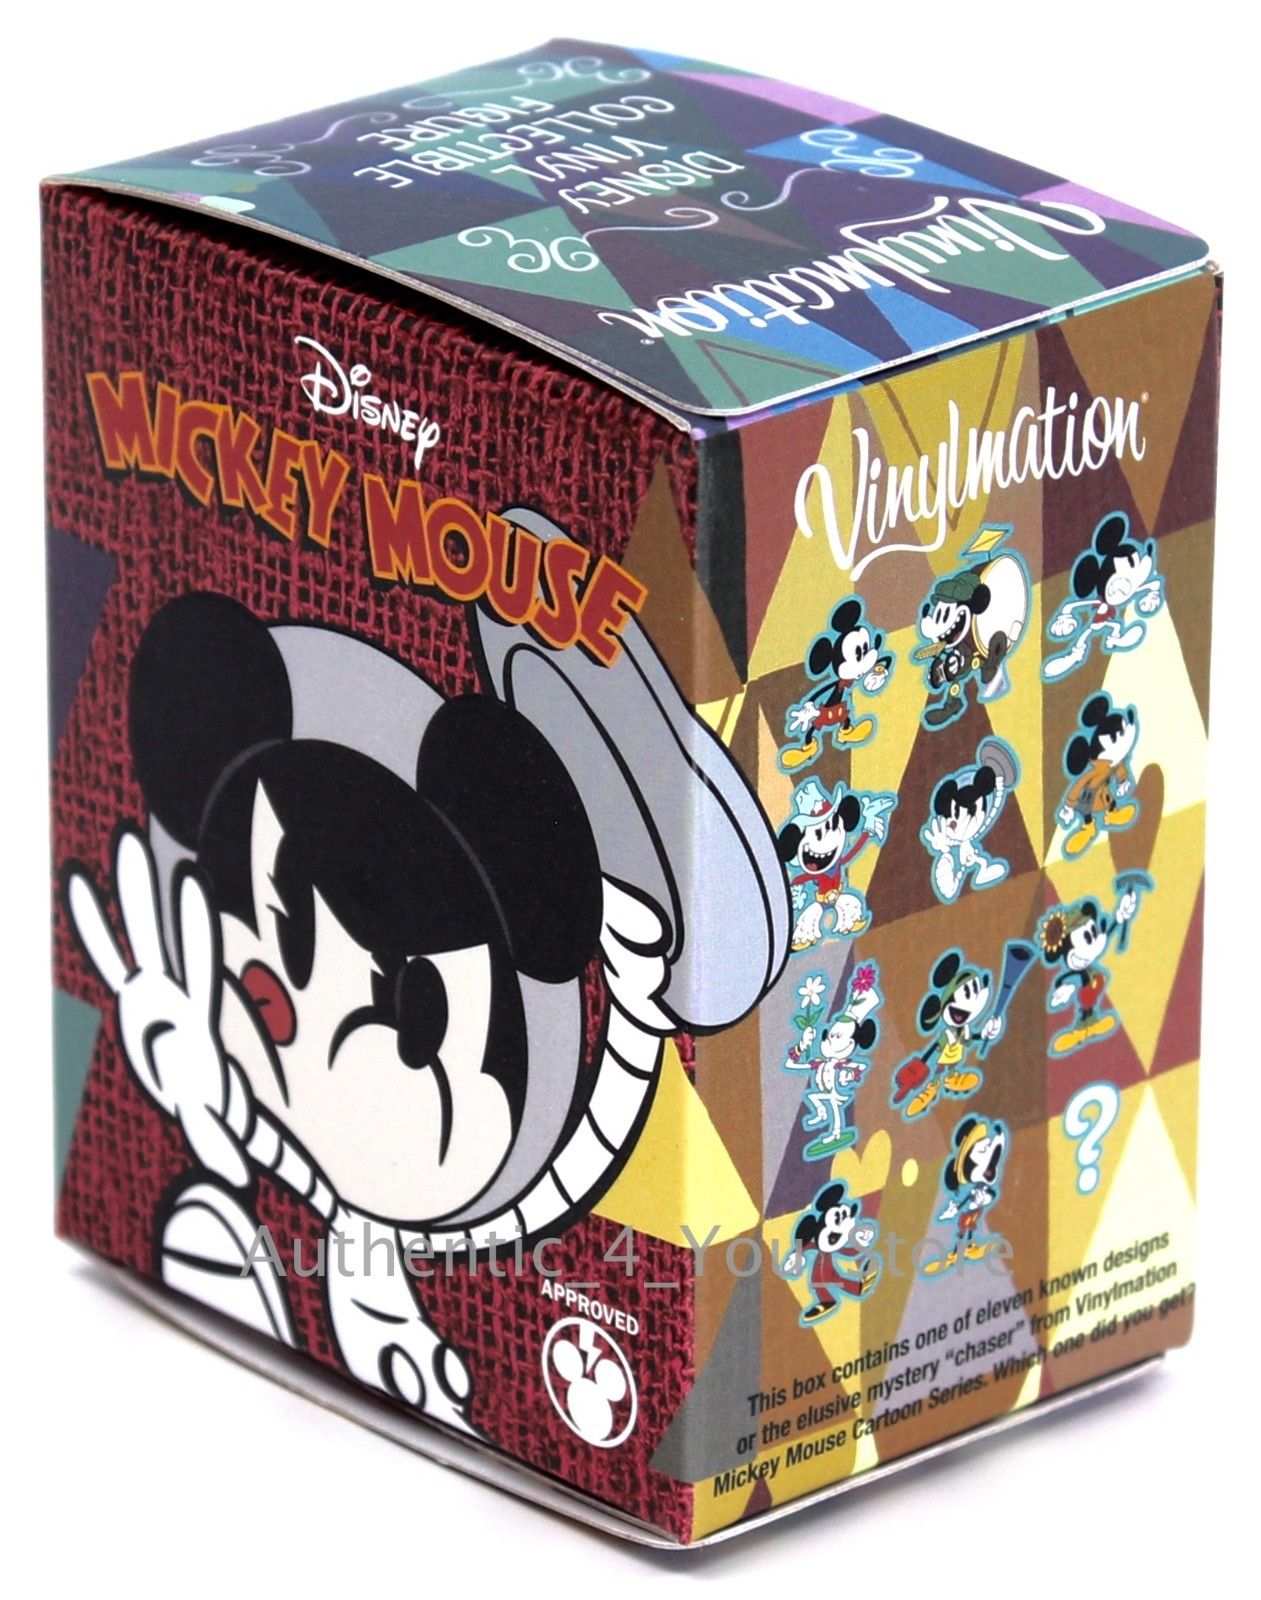 NEW Disney Parks Mickey Mouse Cartoon Series Vinylmation Mystery Blind Box